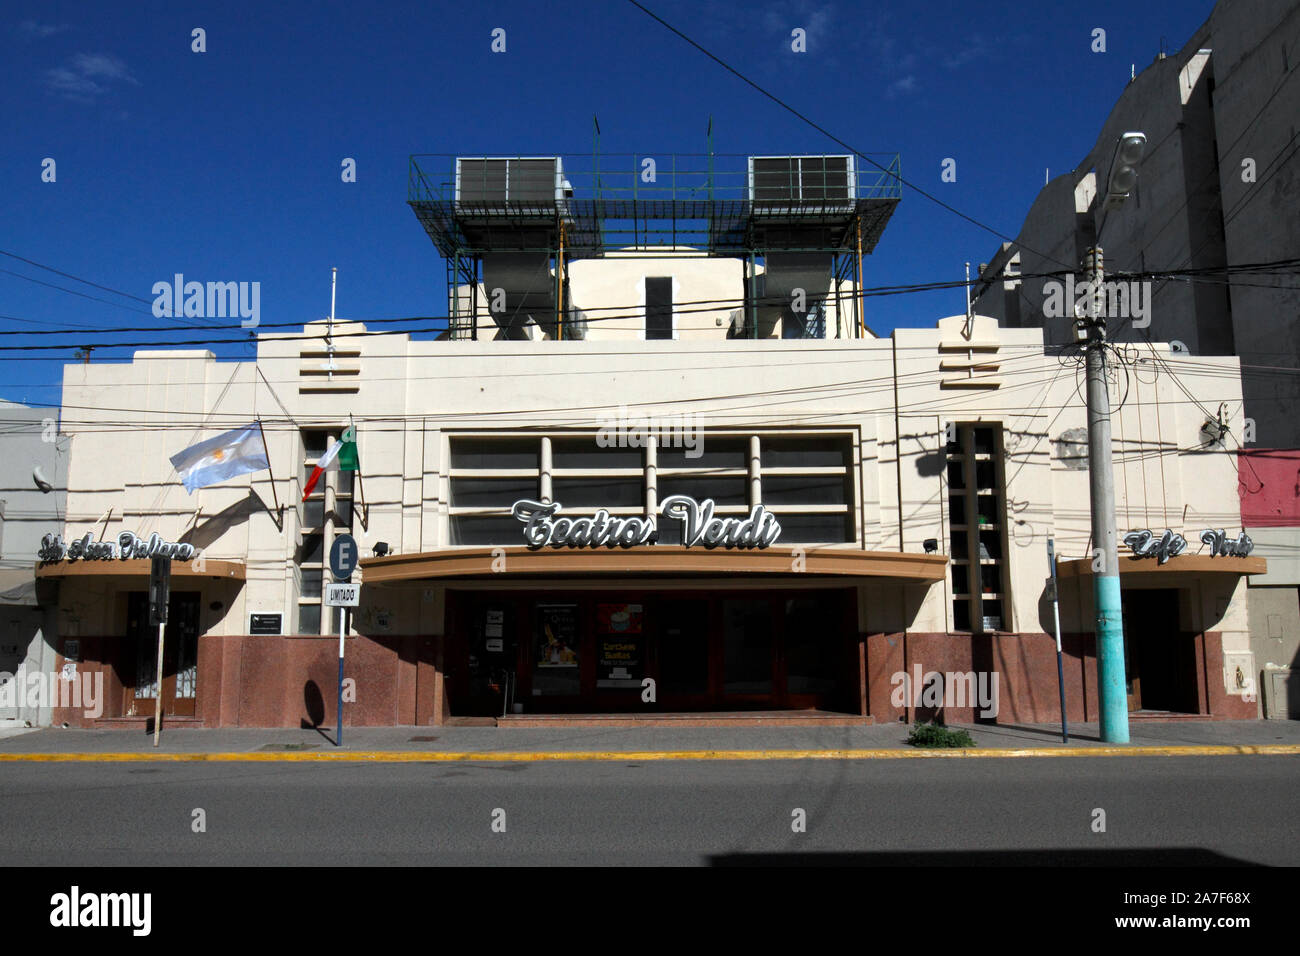 Teatro Verdi, Puerto Madryn, Chubut province, Patagonia, Argentina.  Theatre for arts, music, drama, Stock Photo